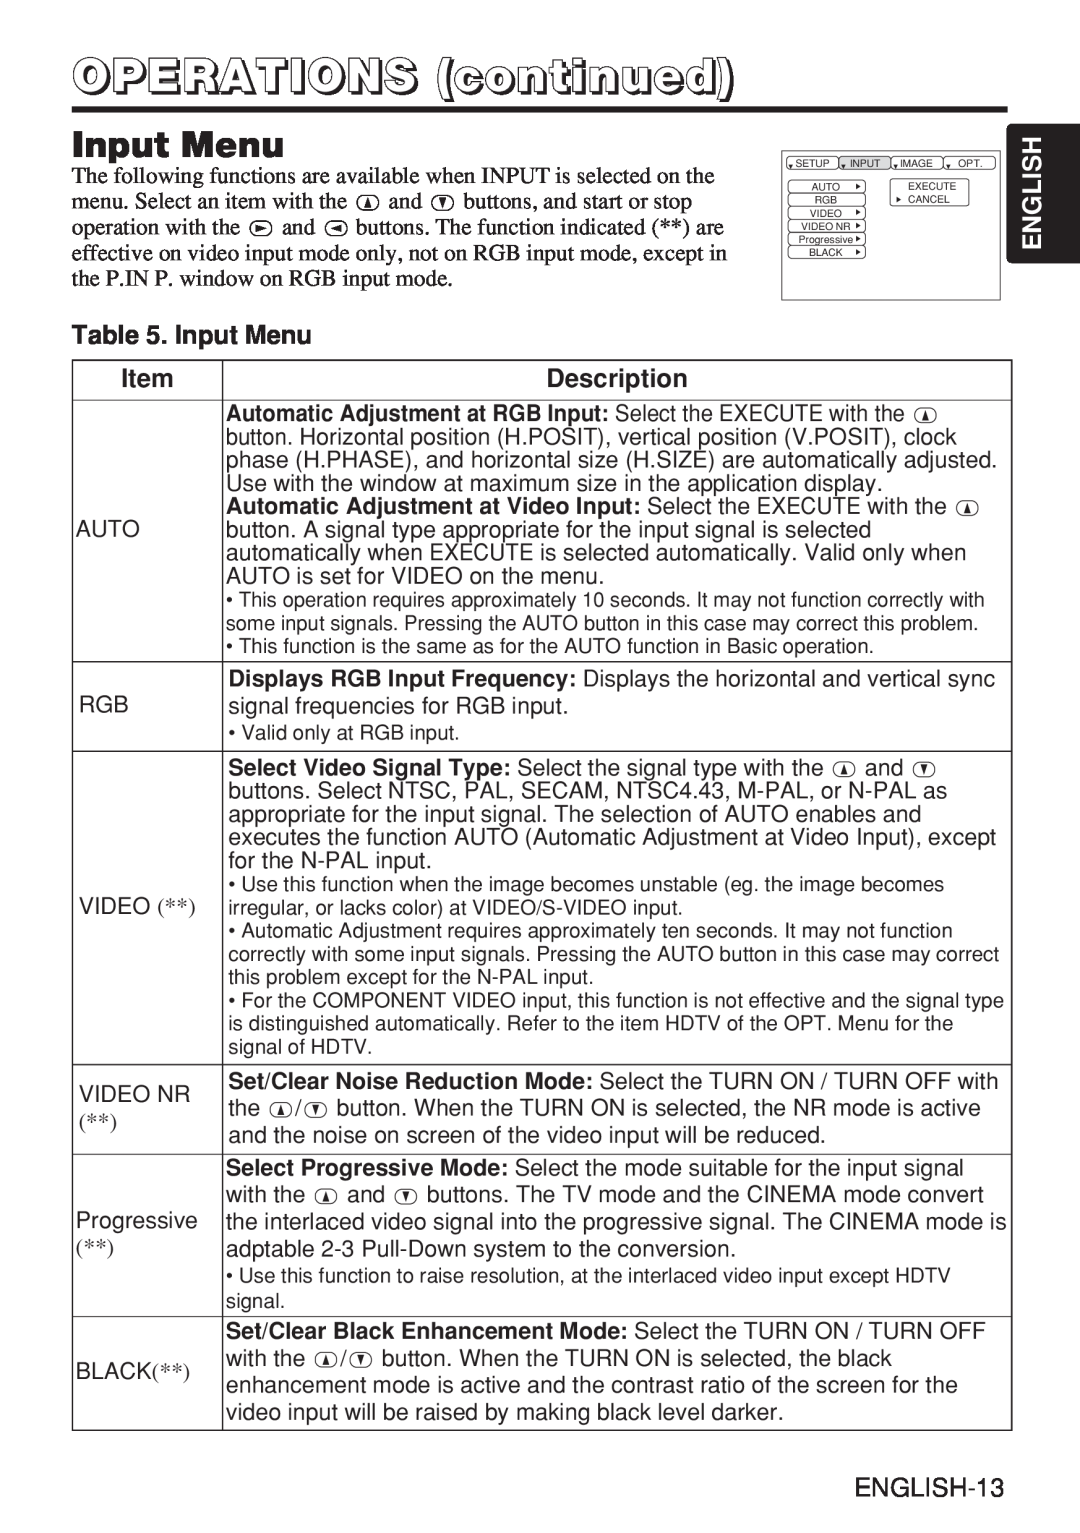 Hitachi CP-X980W user manual Input Menu, OPERATIONS continued, English, Description 